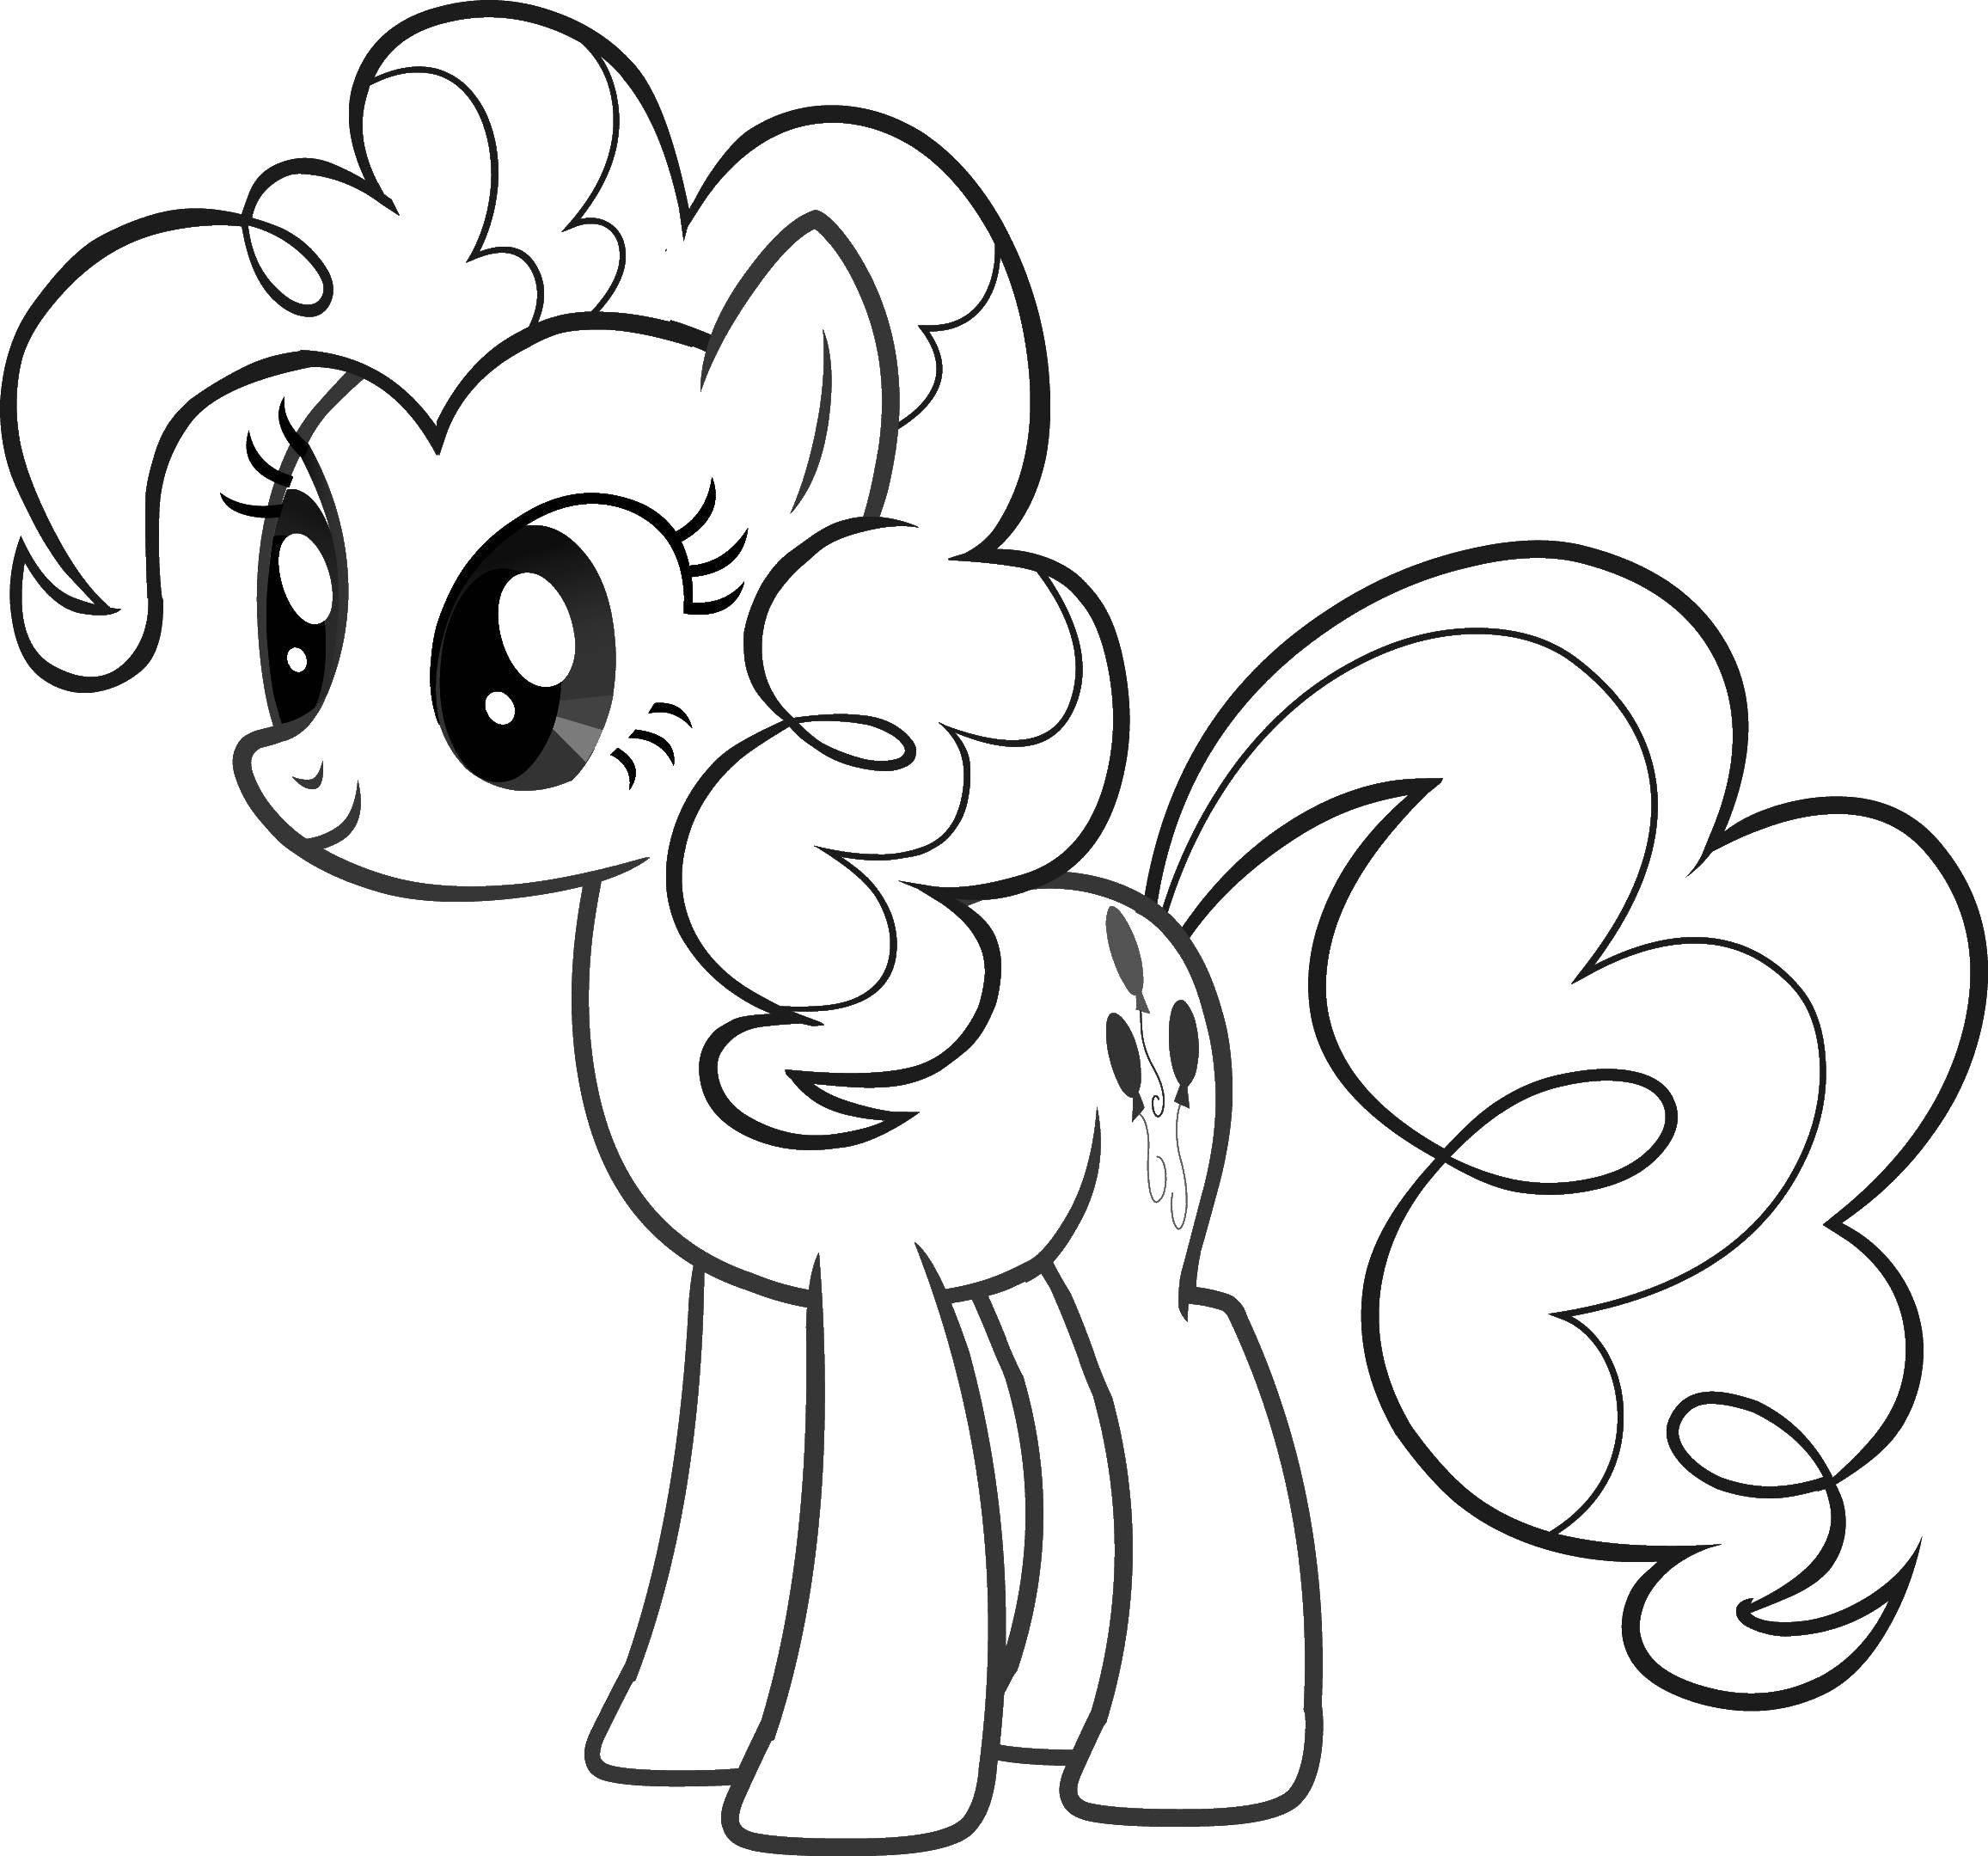 Coloring Pinkie pie. Category my little pony. Tags:  Pinkie pie, pony.